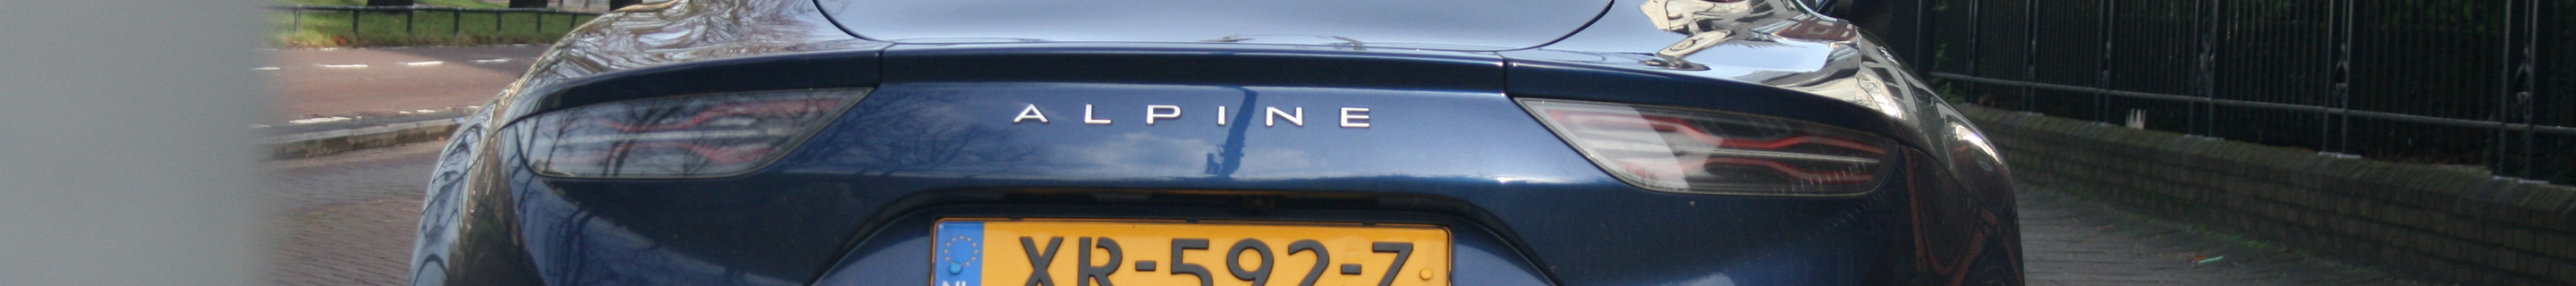 Alpine A110 Légende